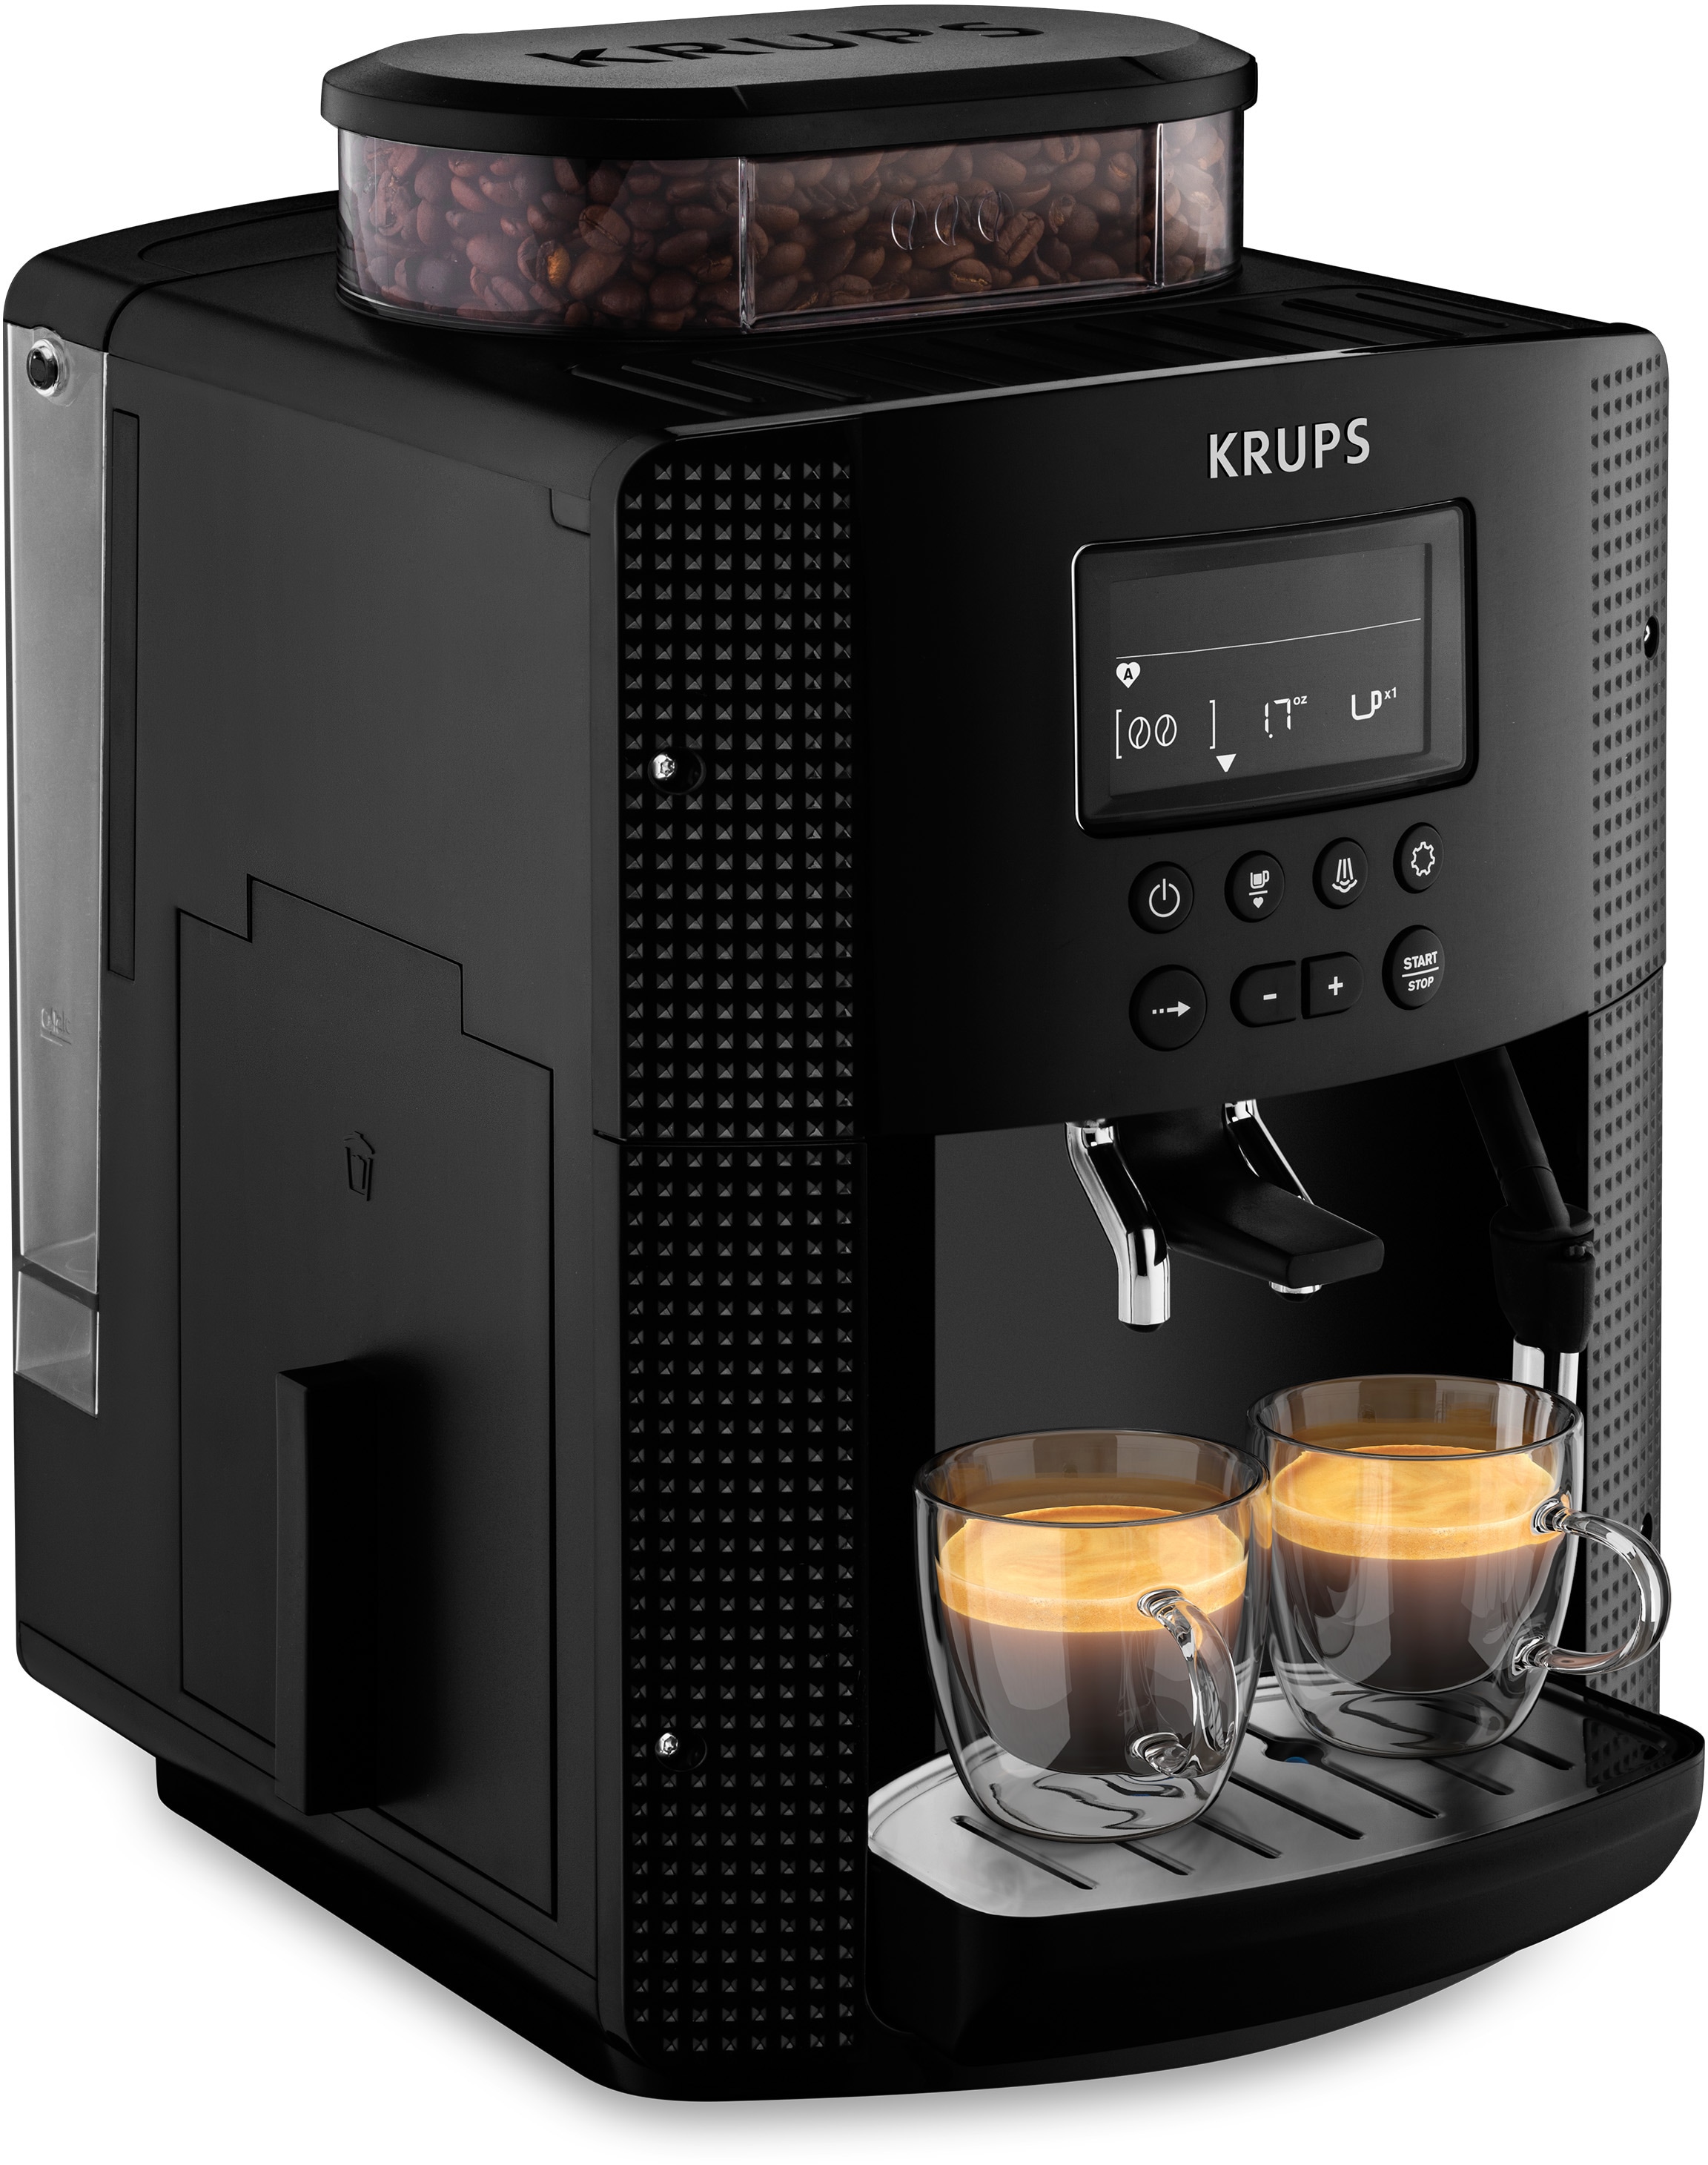 Kaffeevollautomat »EA8150«, Arabica Display, LCD-Display, Speichermodus, Dampfdüse für...